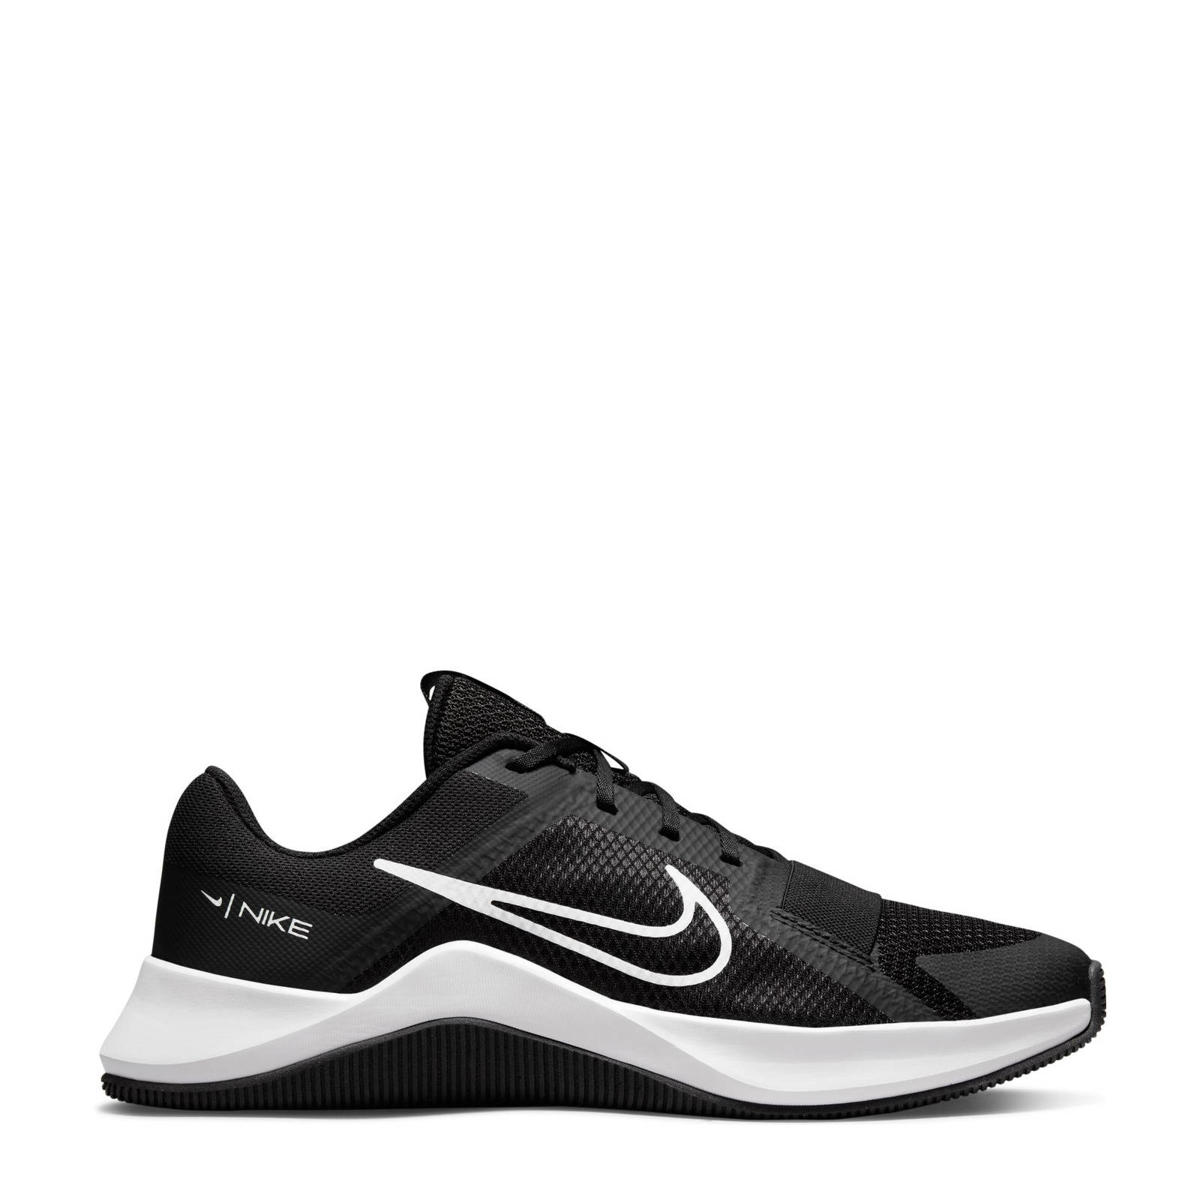 Nike MC fitness schoenen zwart/wit wehkamp